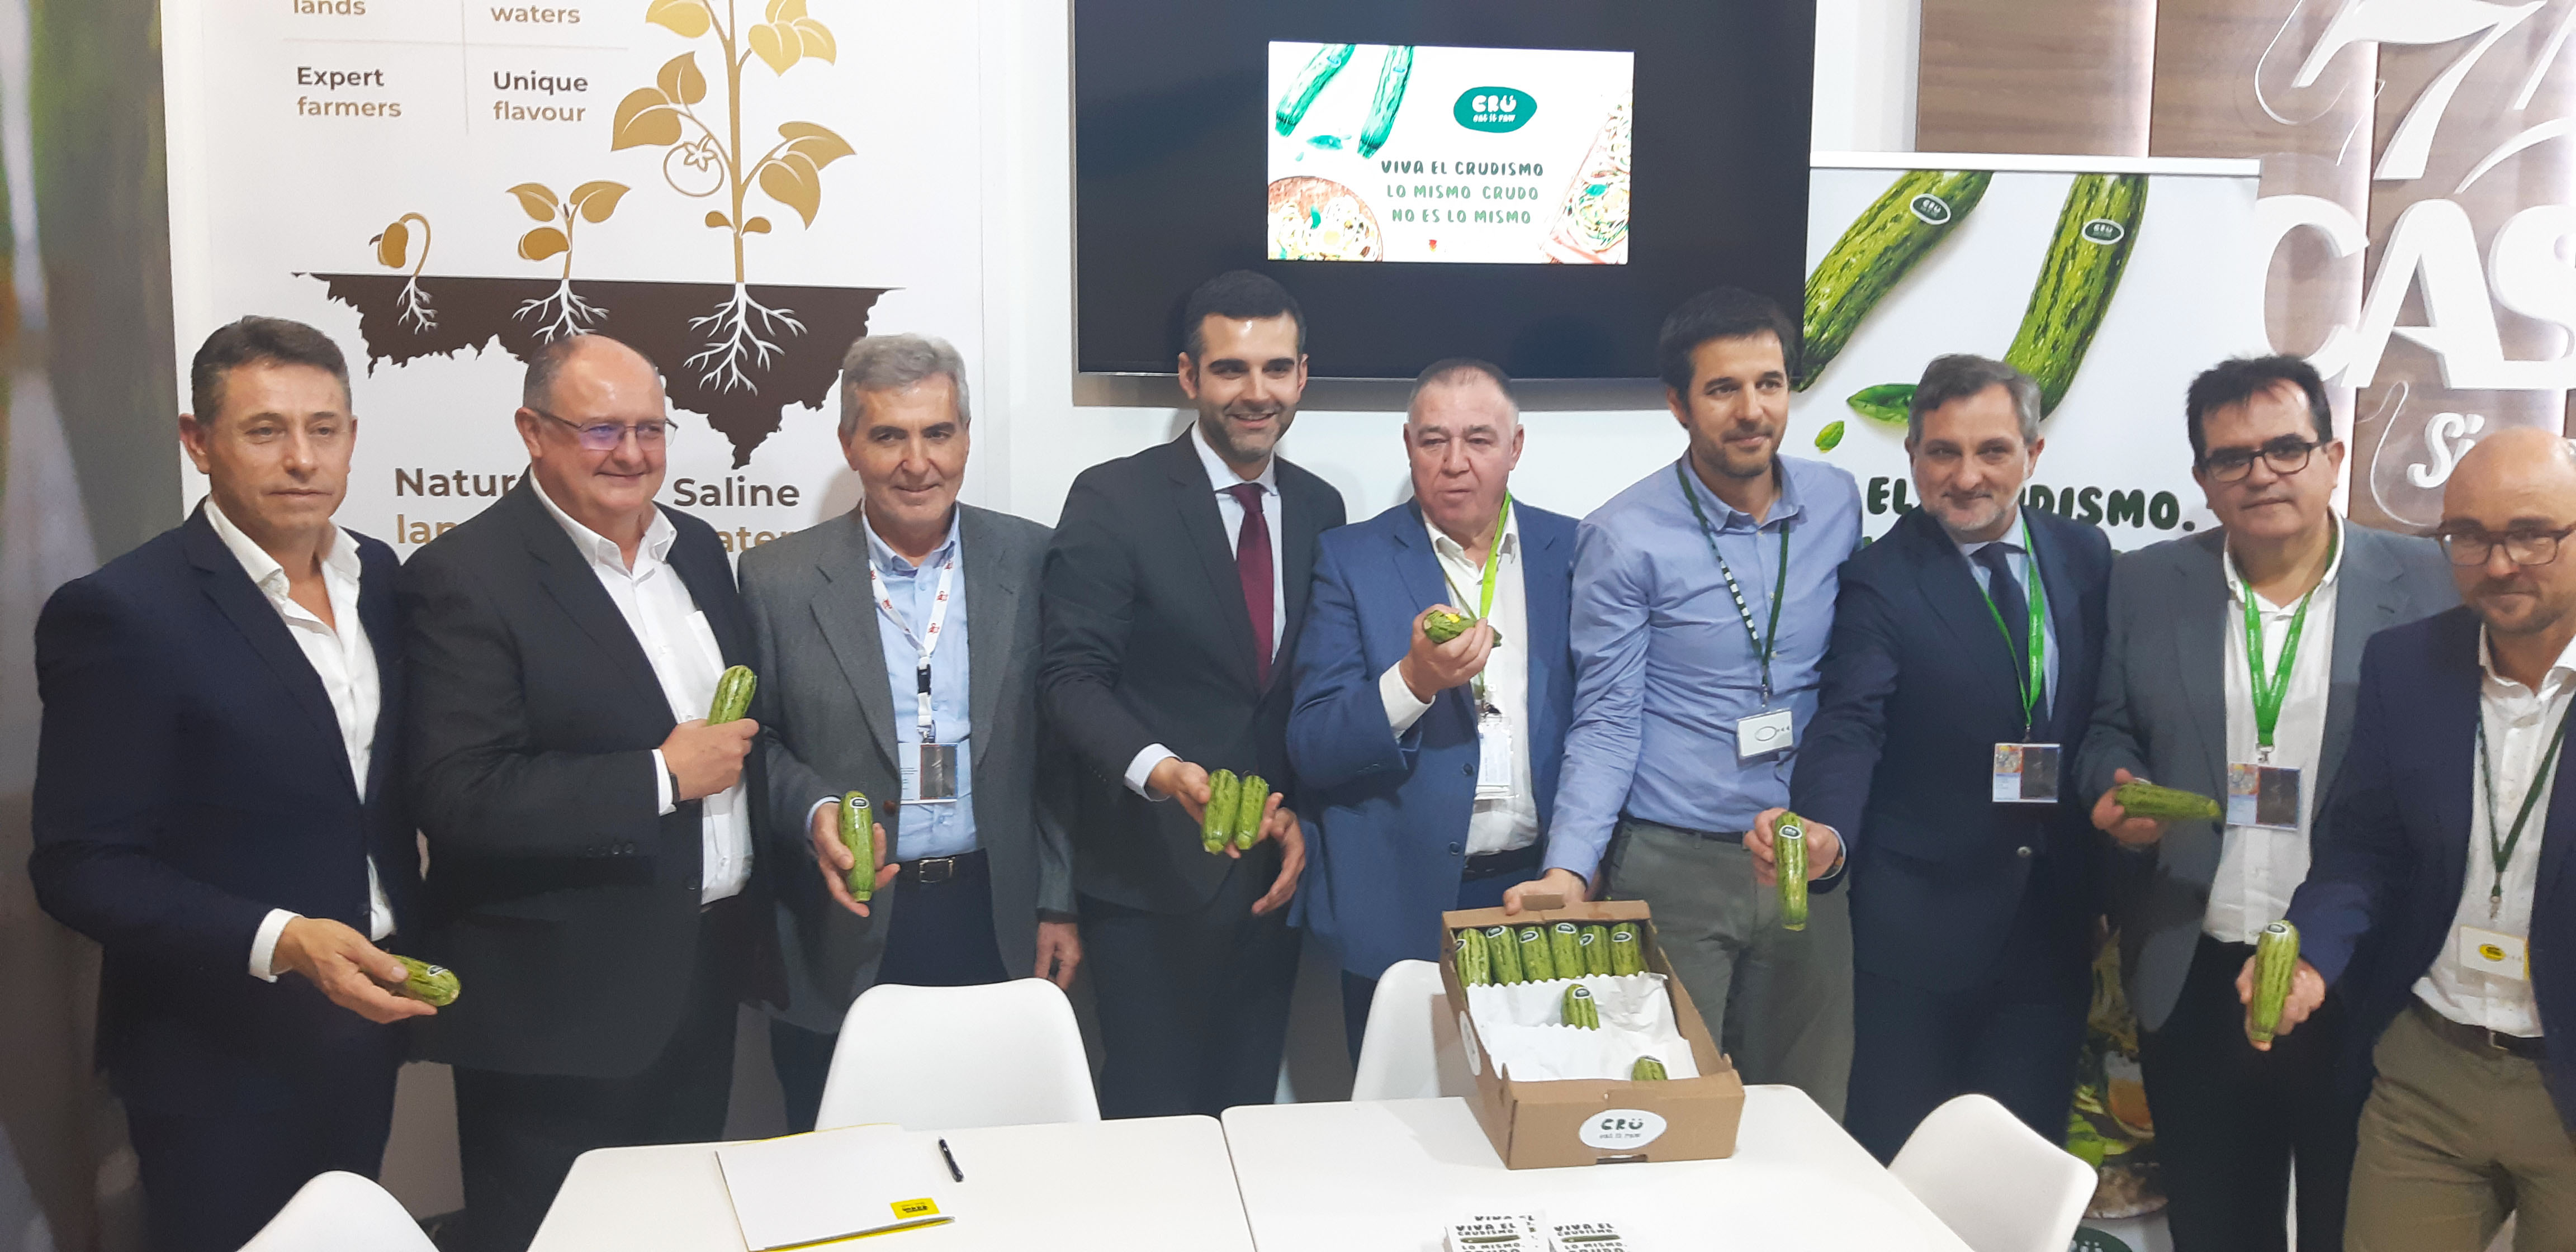 I Jornada de Sabores Almería en Fruit Logistica 2020